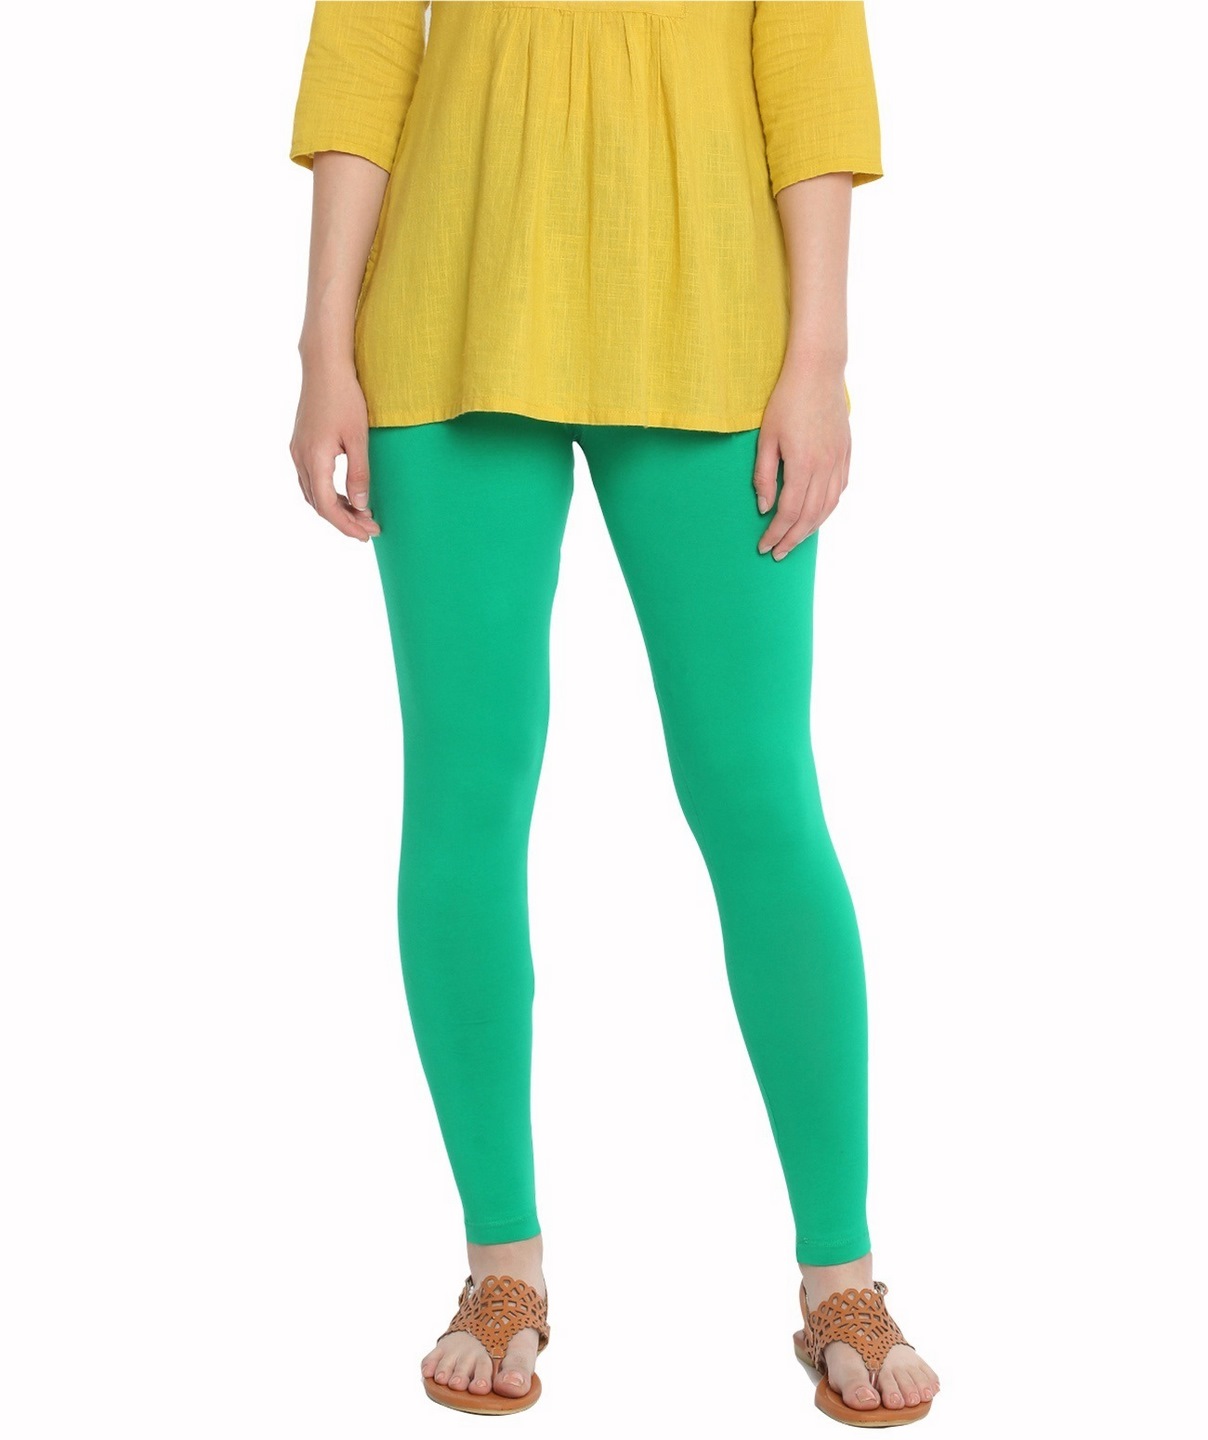 Shop Prisma's Bottle Green Capri Leggings for Comfortable and Stylish  Workout Wear